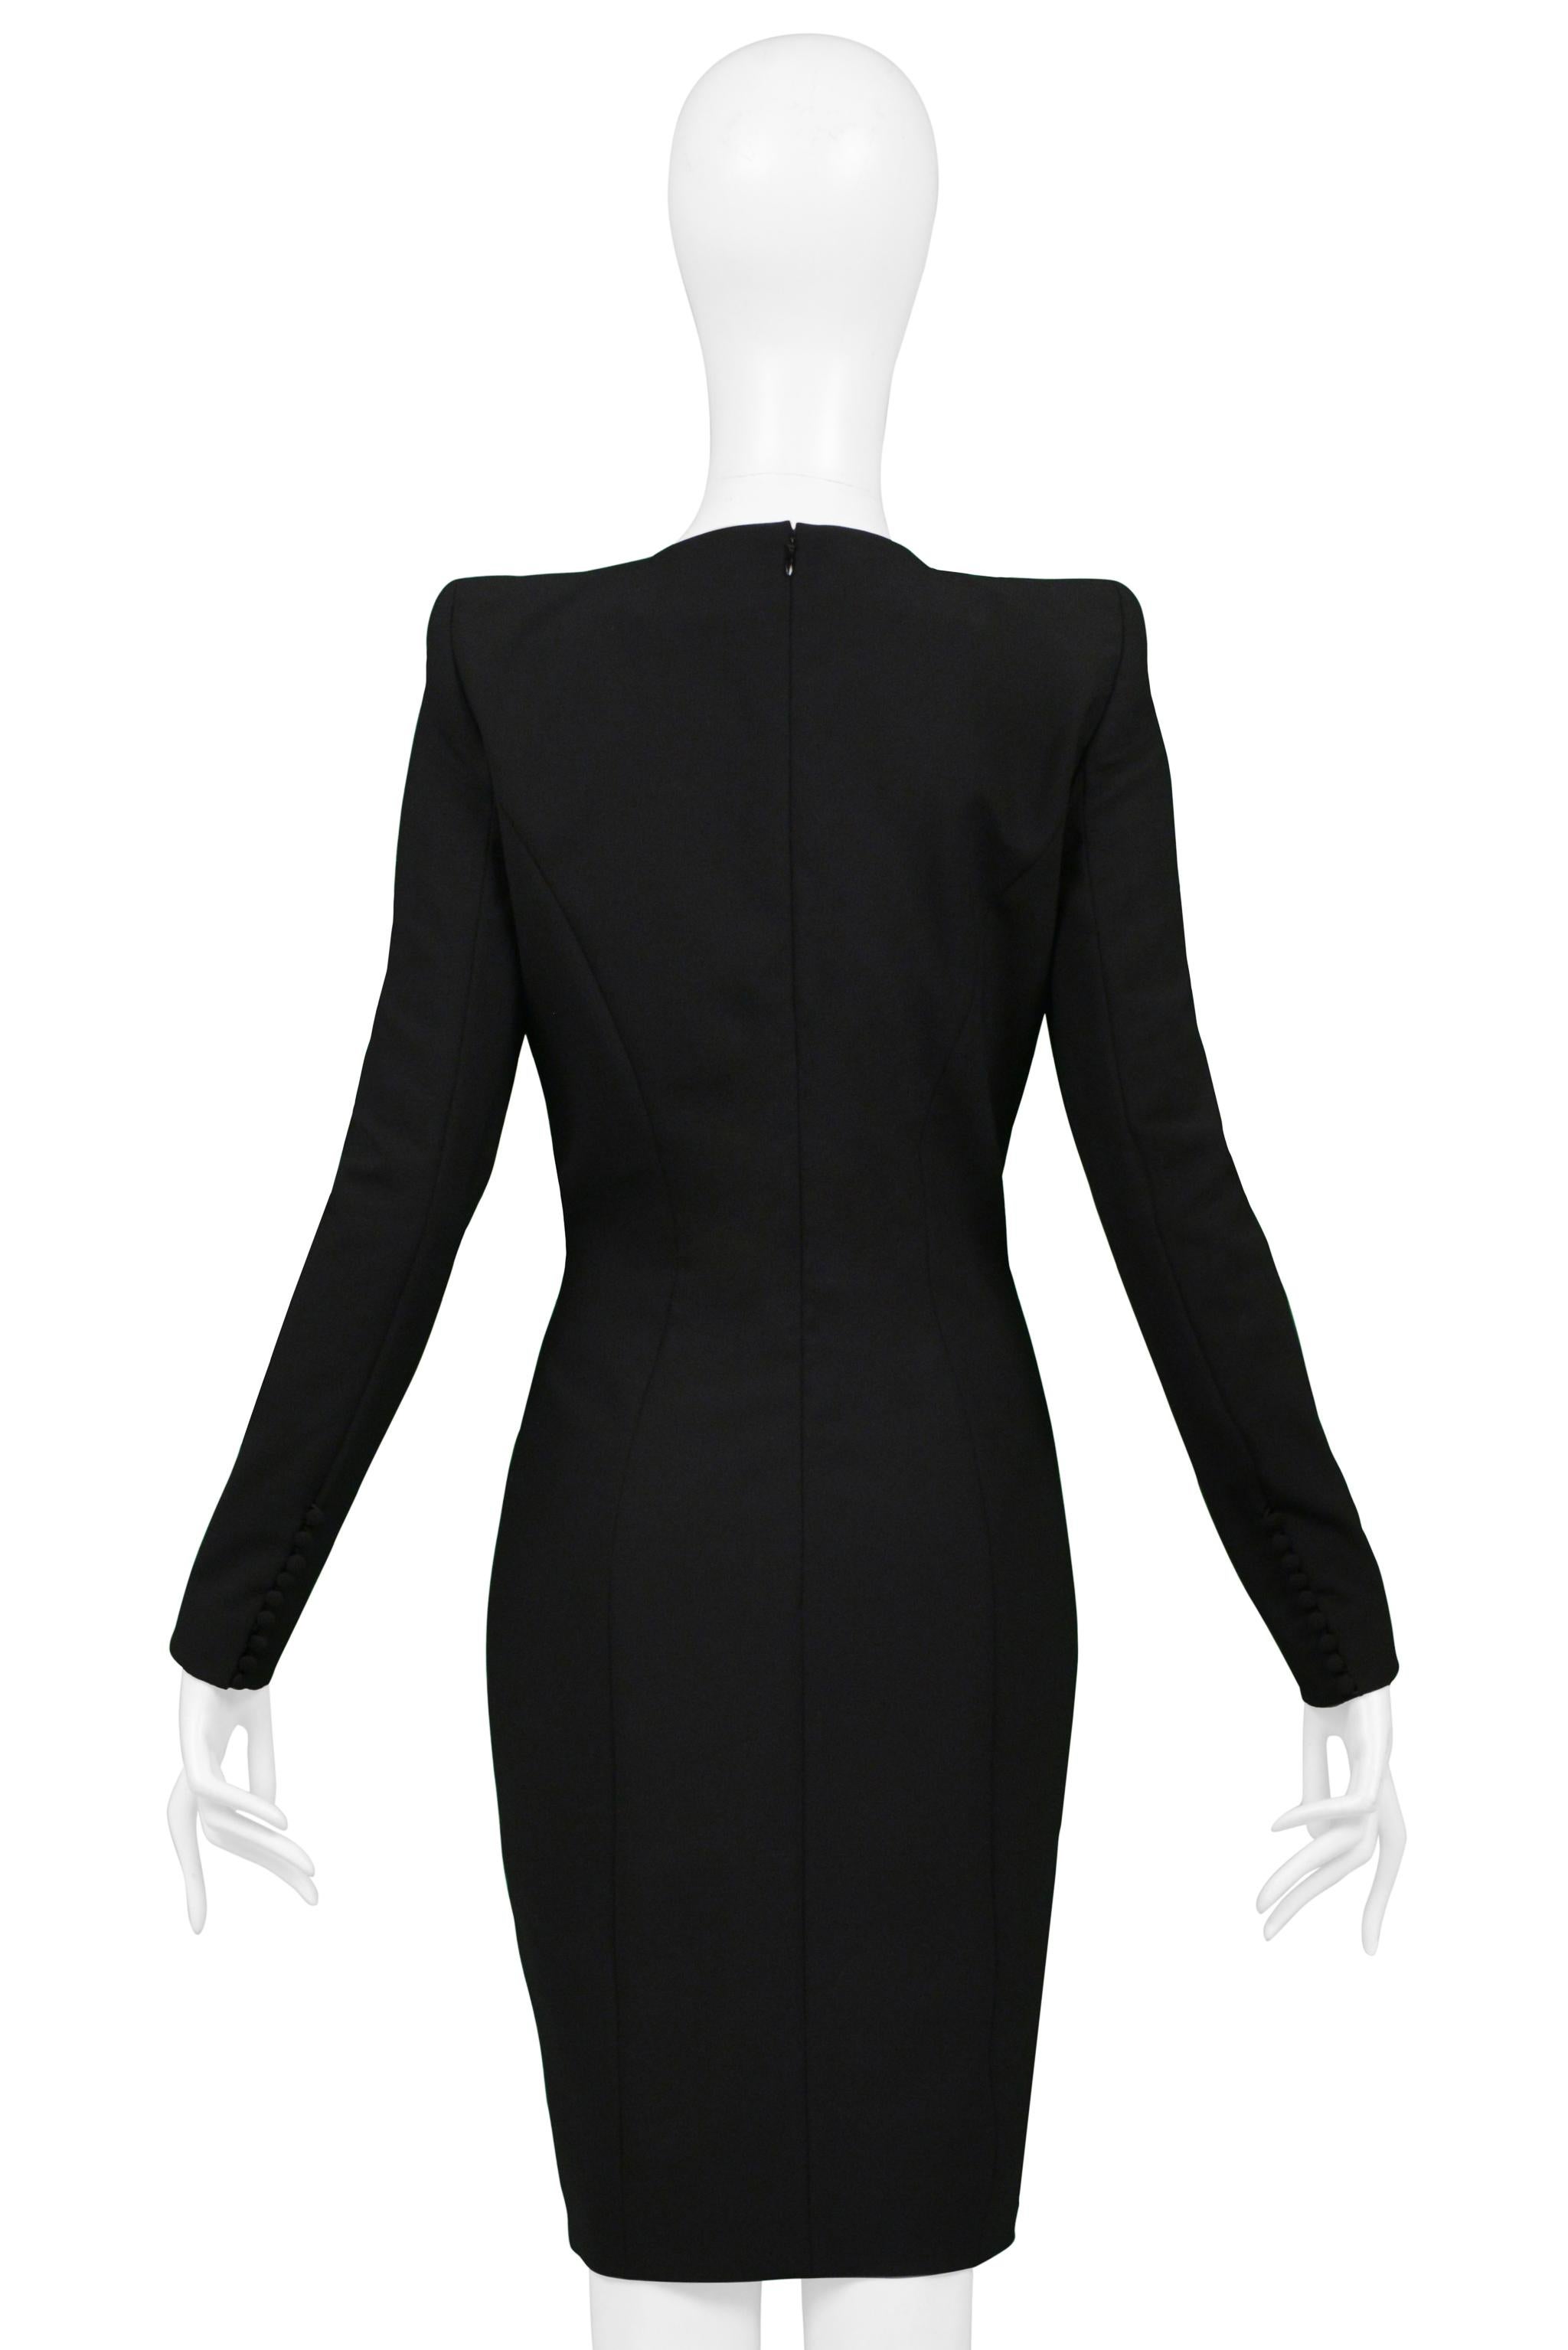 Women's John Galliano Black Tuxedo Dress With Long Sleeves 1997 For Sale